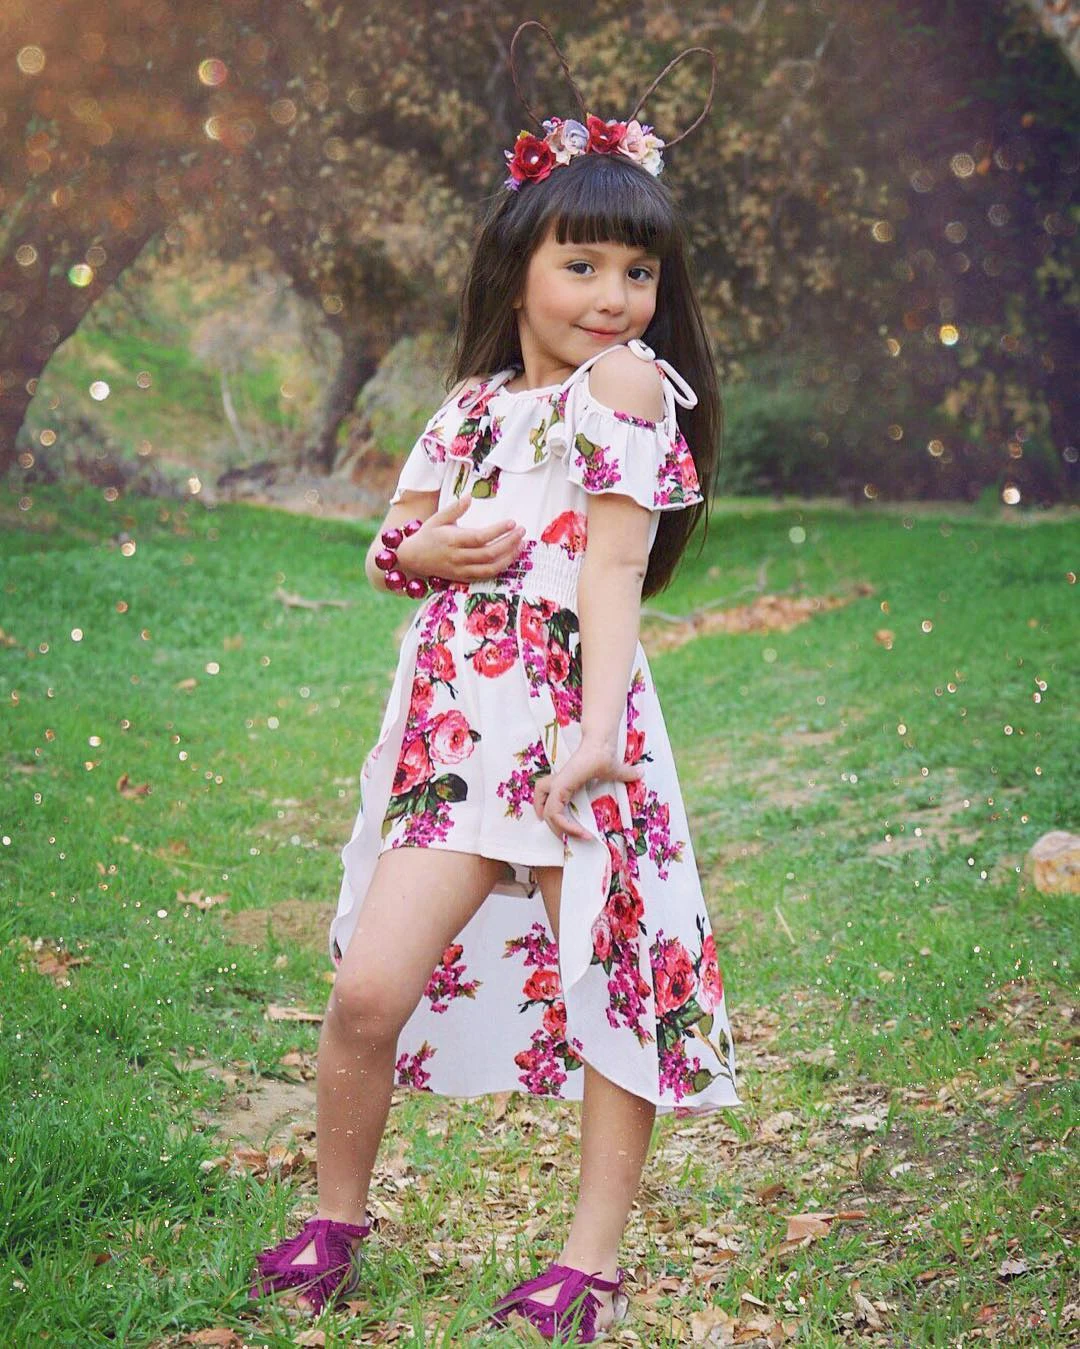 0-5T Girls Dresses New Summer Fashion Toddler Baby Kids Floral Print Sleeveless Clothes Party Bib Strap Tutu Dress Girl kid